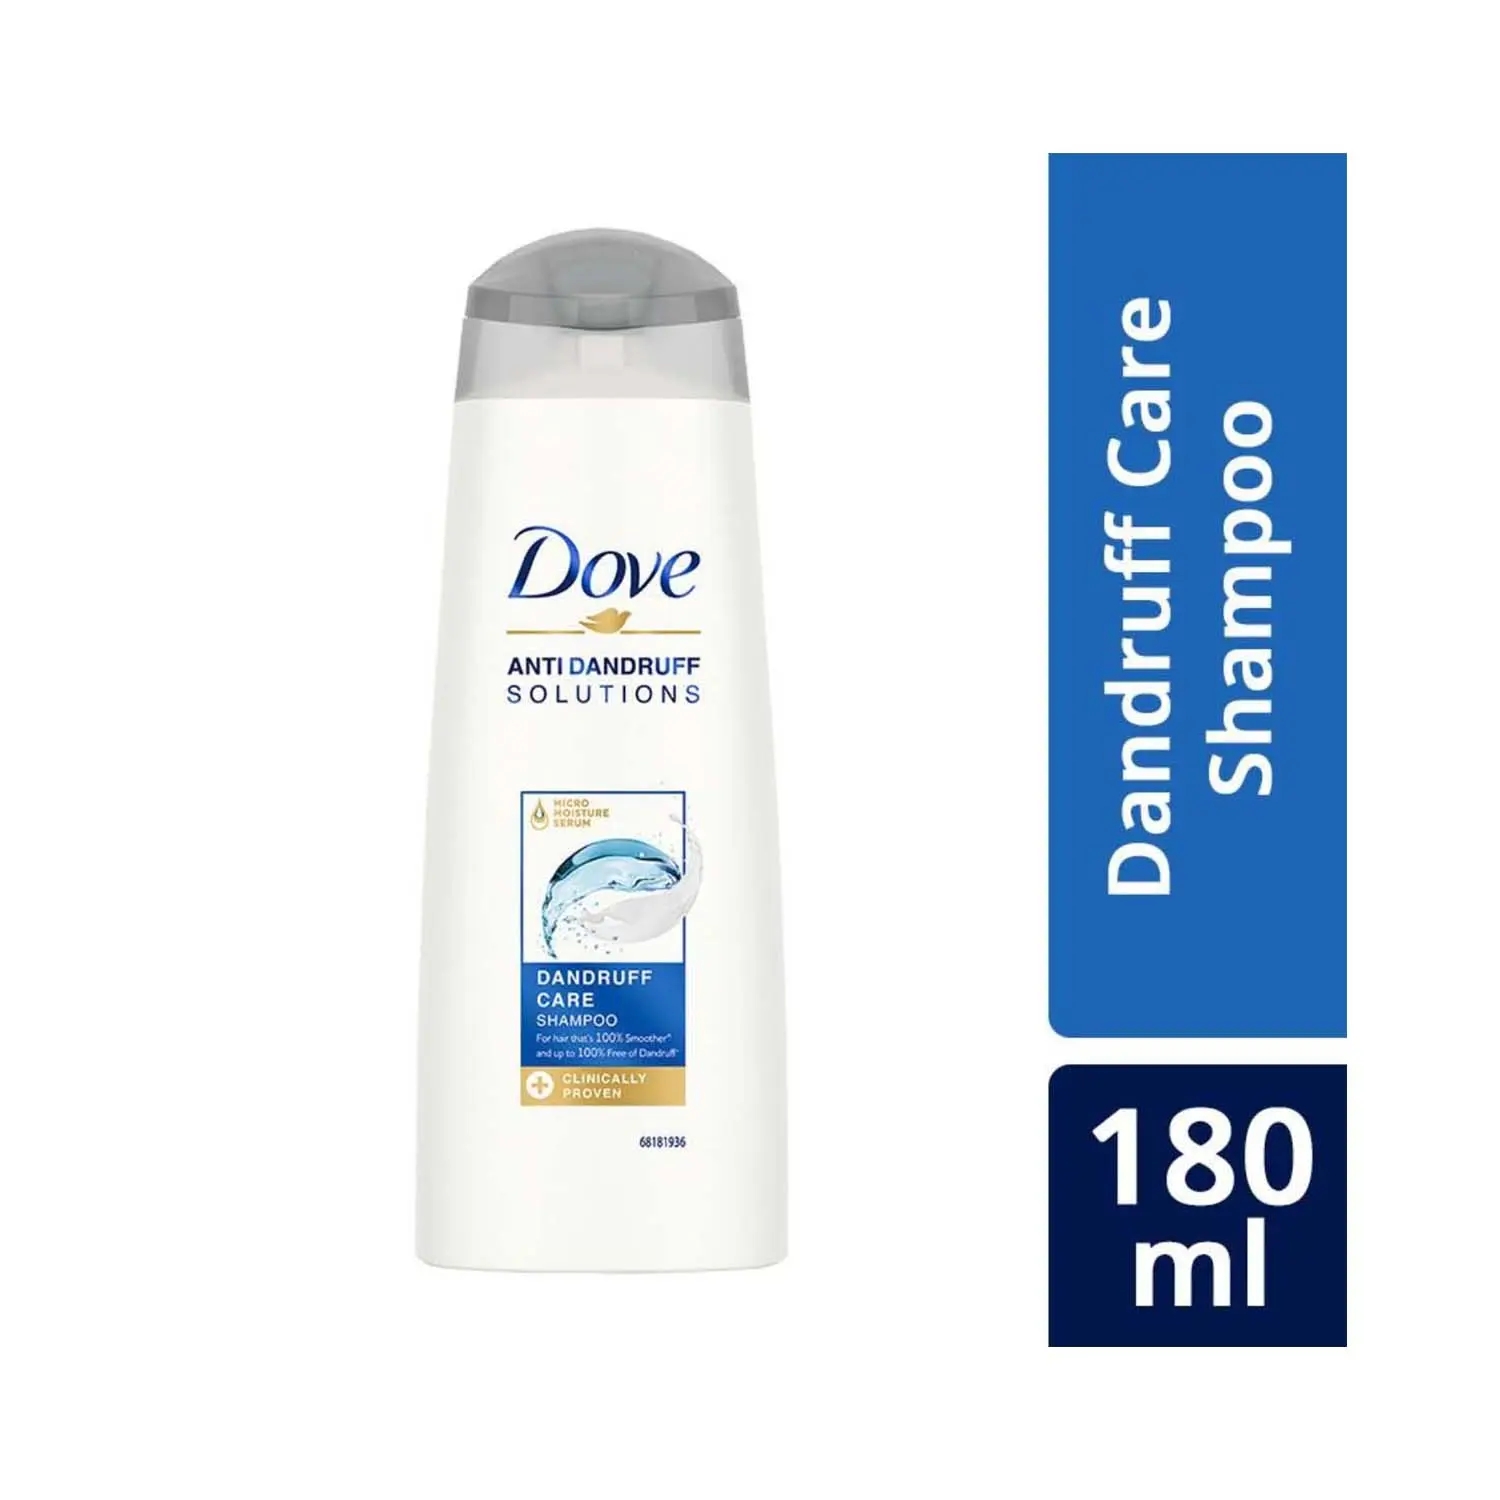 Dove | Dove Dandruff Care Hair Shampoo (180ml)